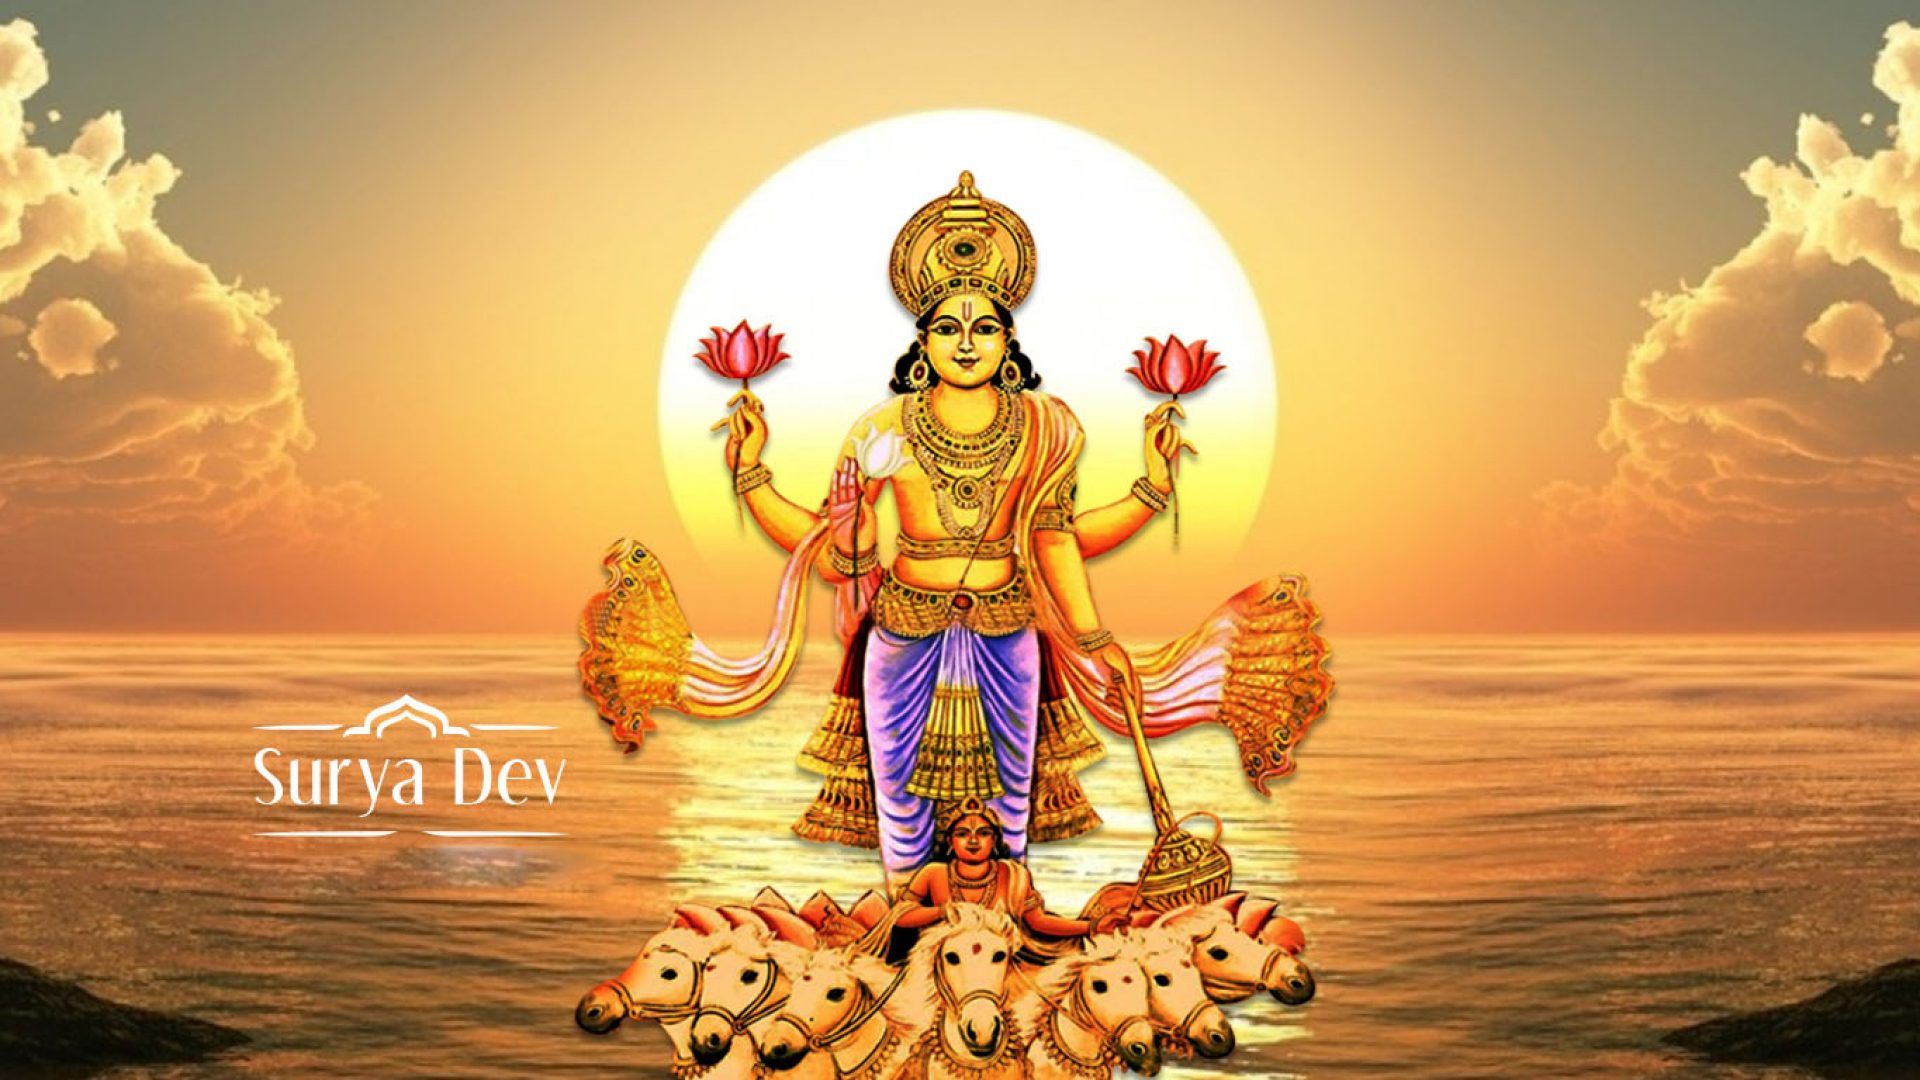 Surya Dev Image 1366×768. Hindu Gods and Goddesses